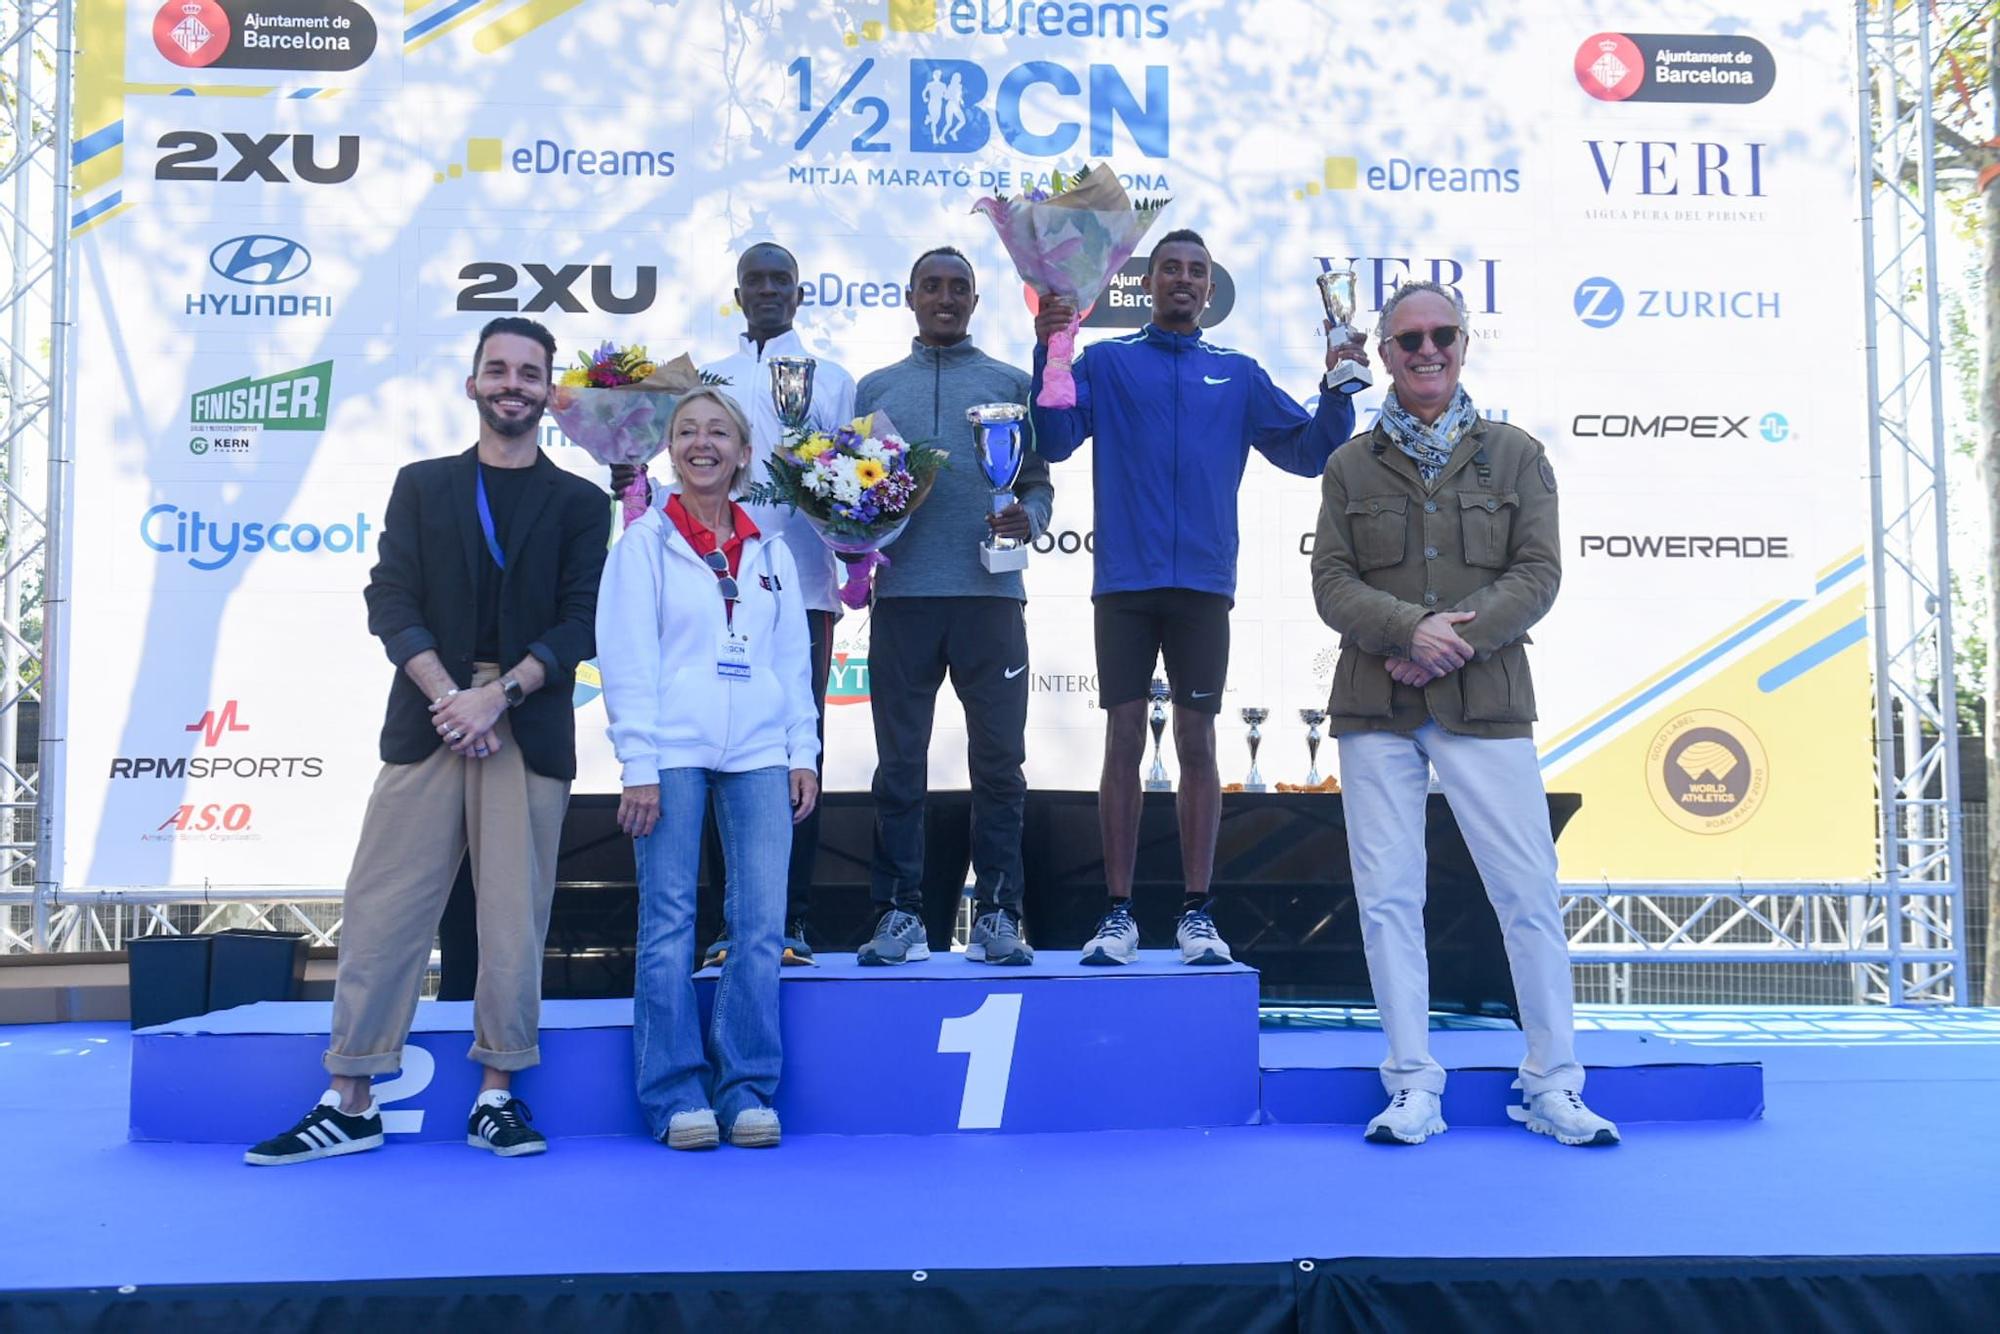 Circuit record in the Barcelona half marathon